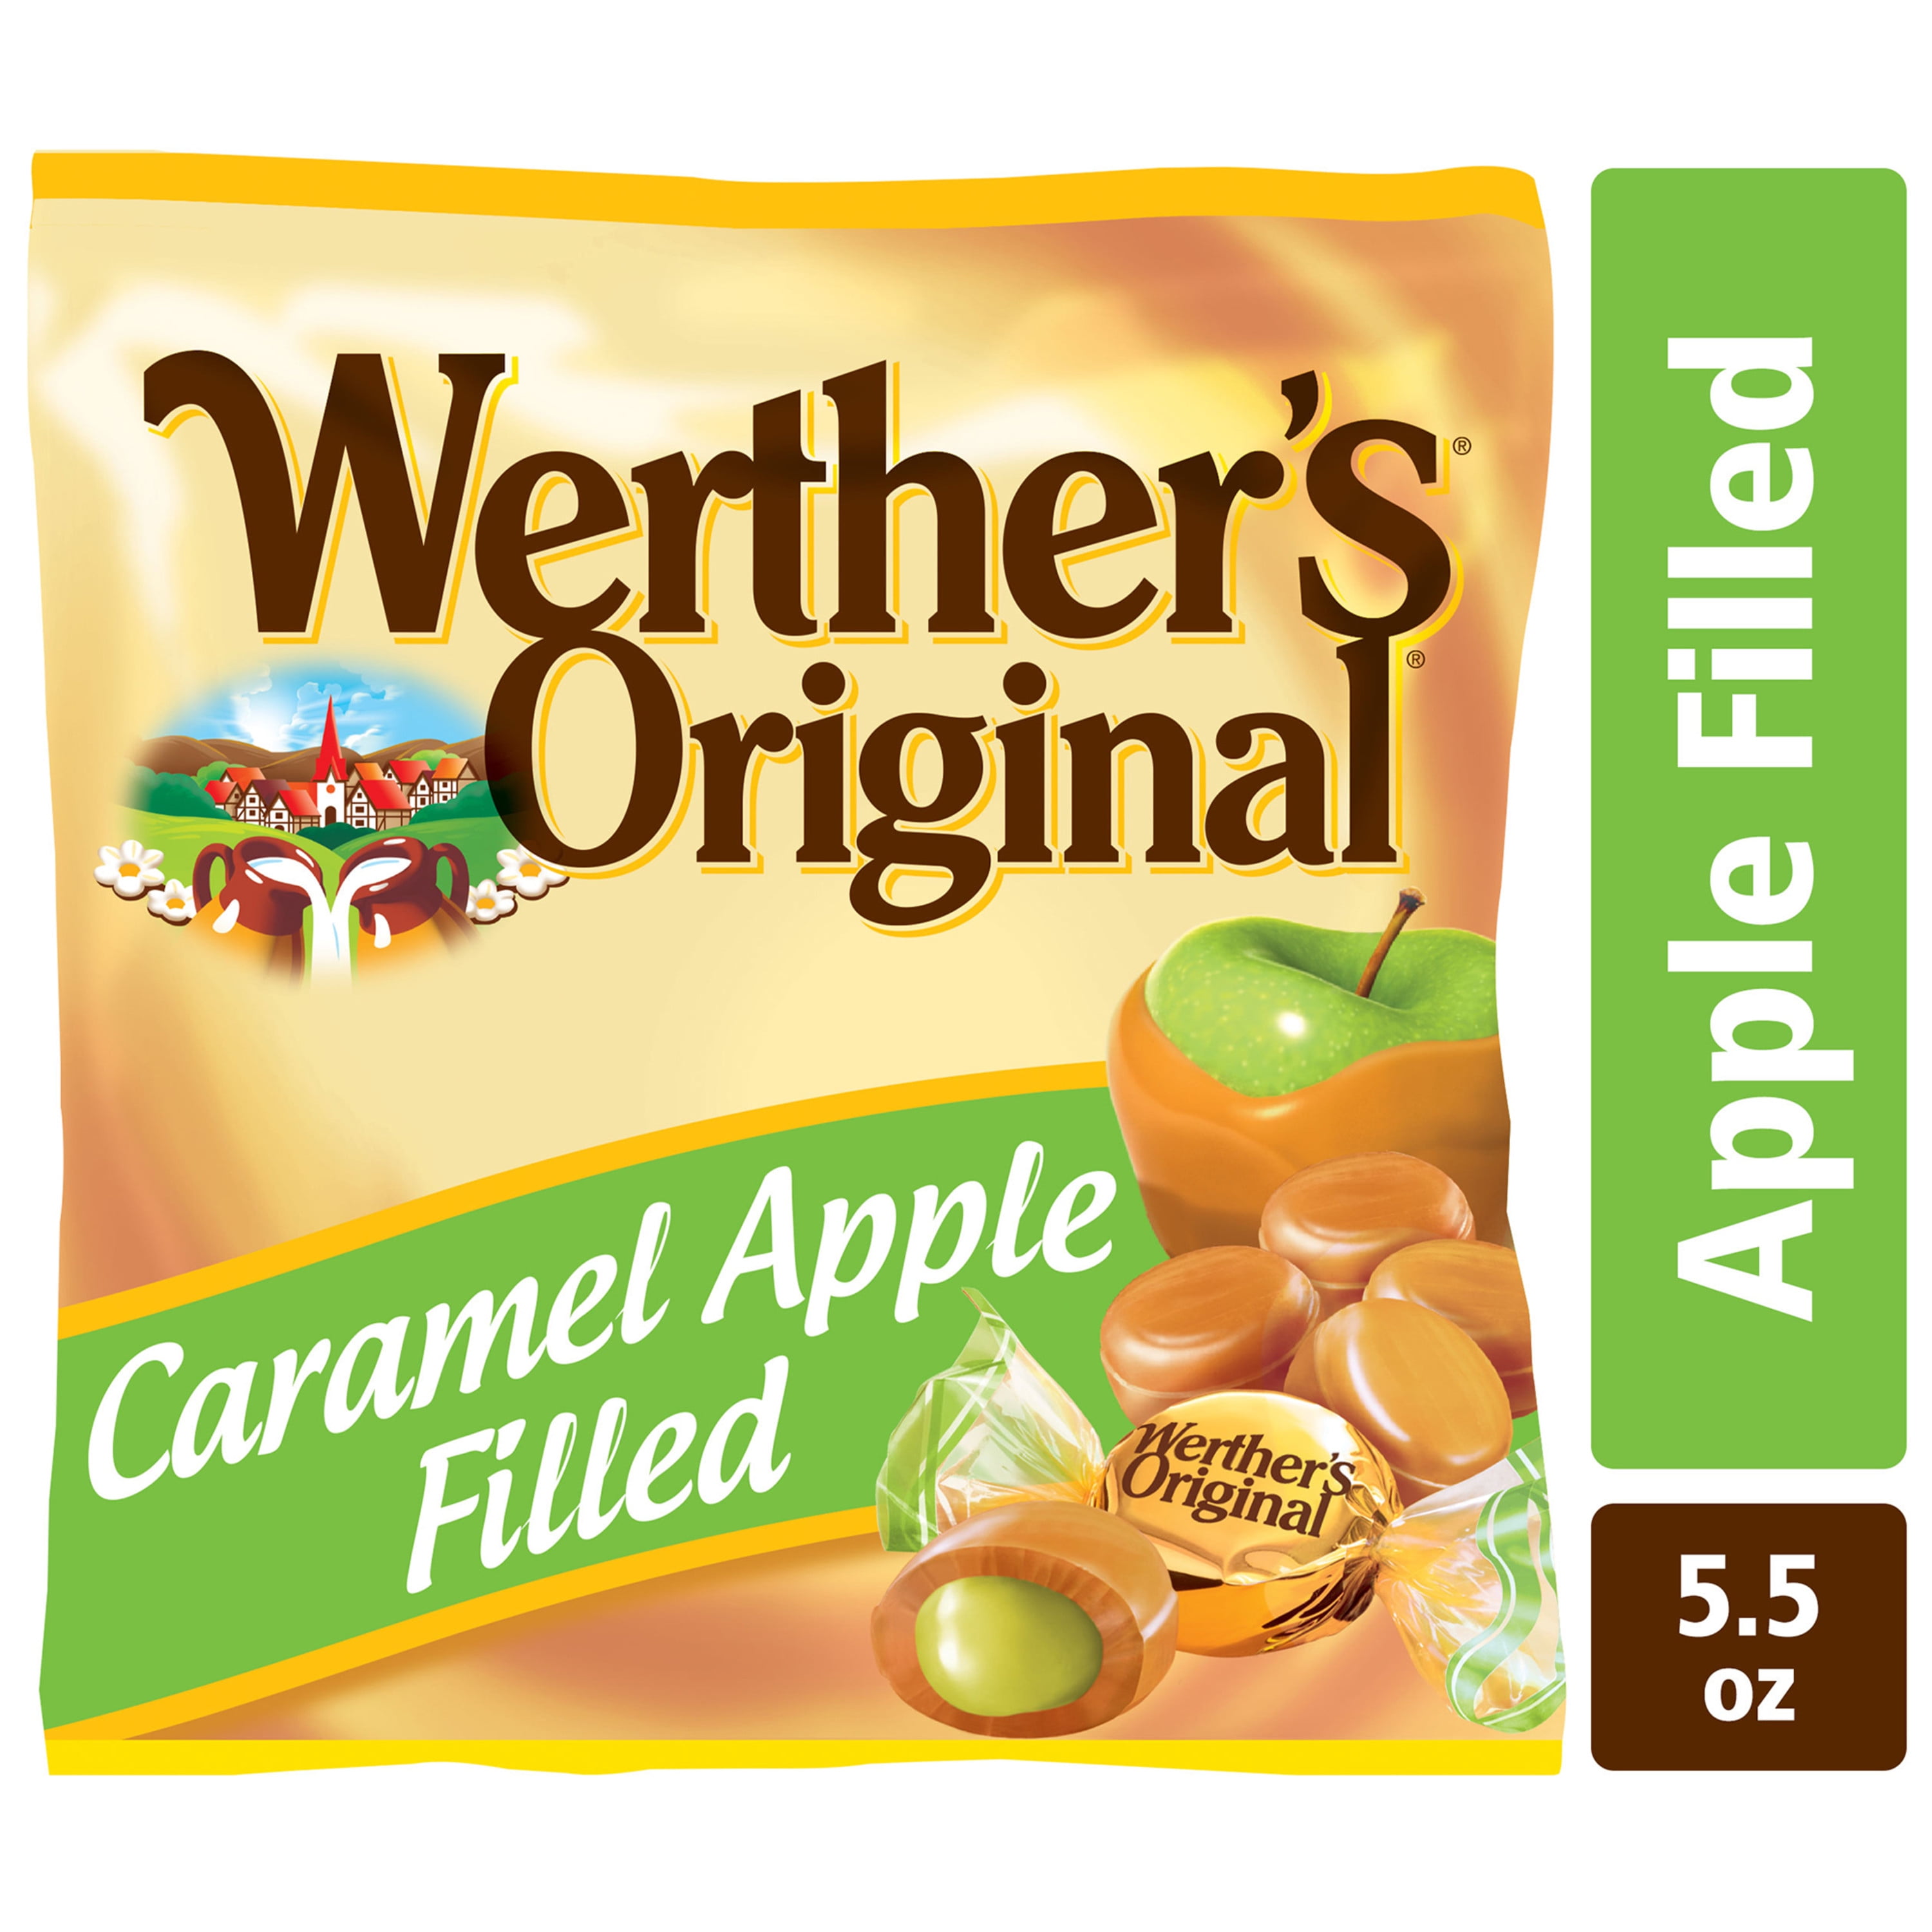 Werthers Original Hard Apple Filled Caramel Candy, 5.5 oz